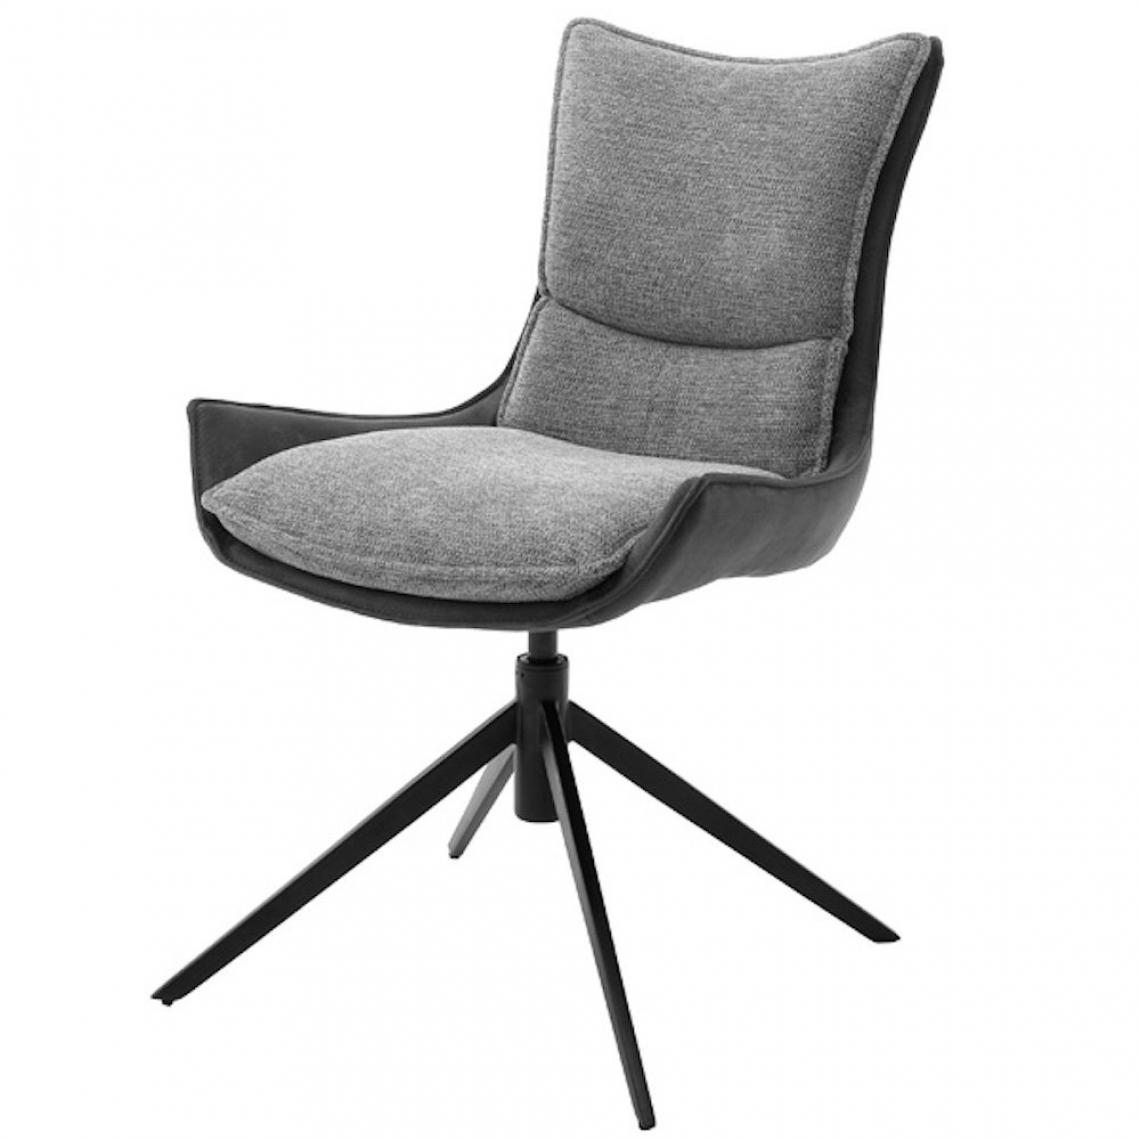 Inside 75 - Chaise design KAKU tissu gris anthracite pieds noir - Chaises